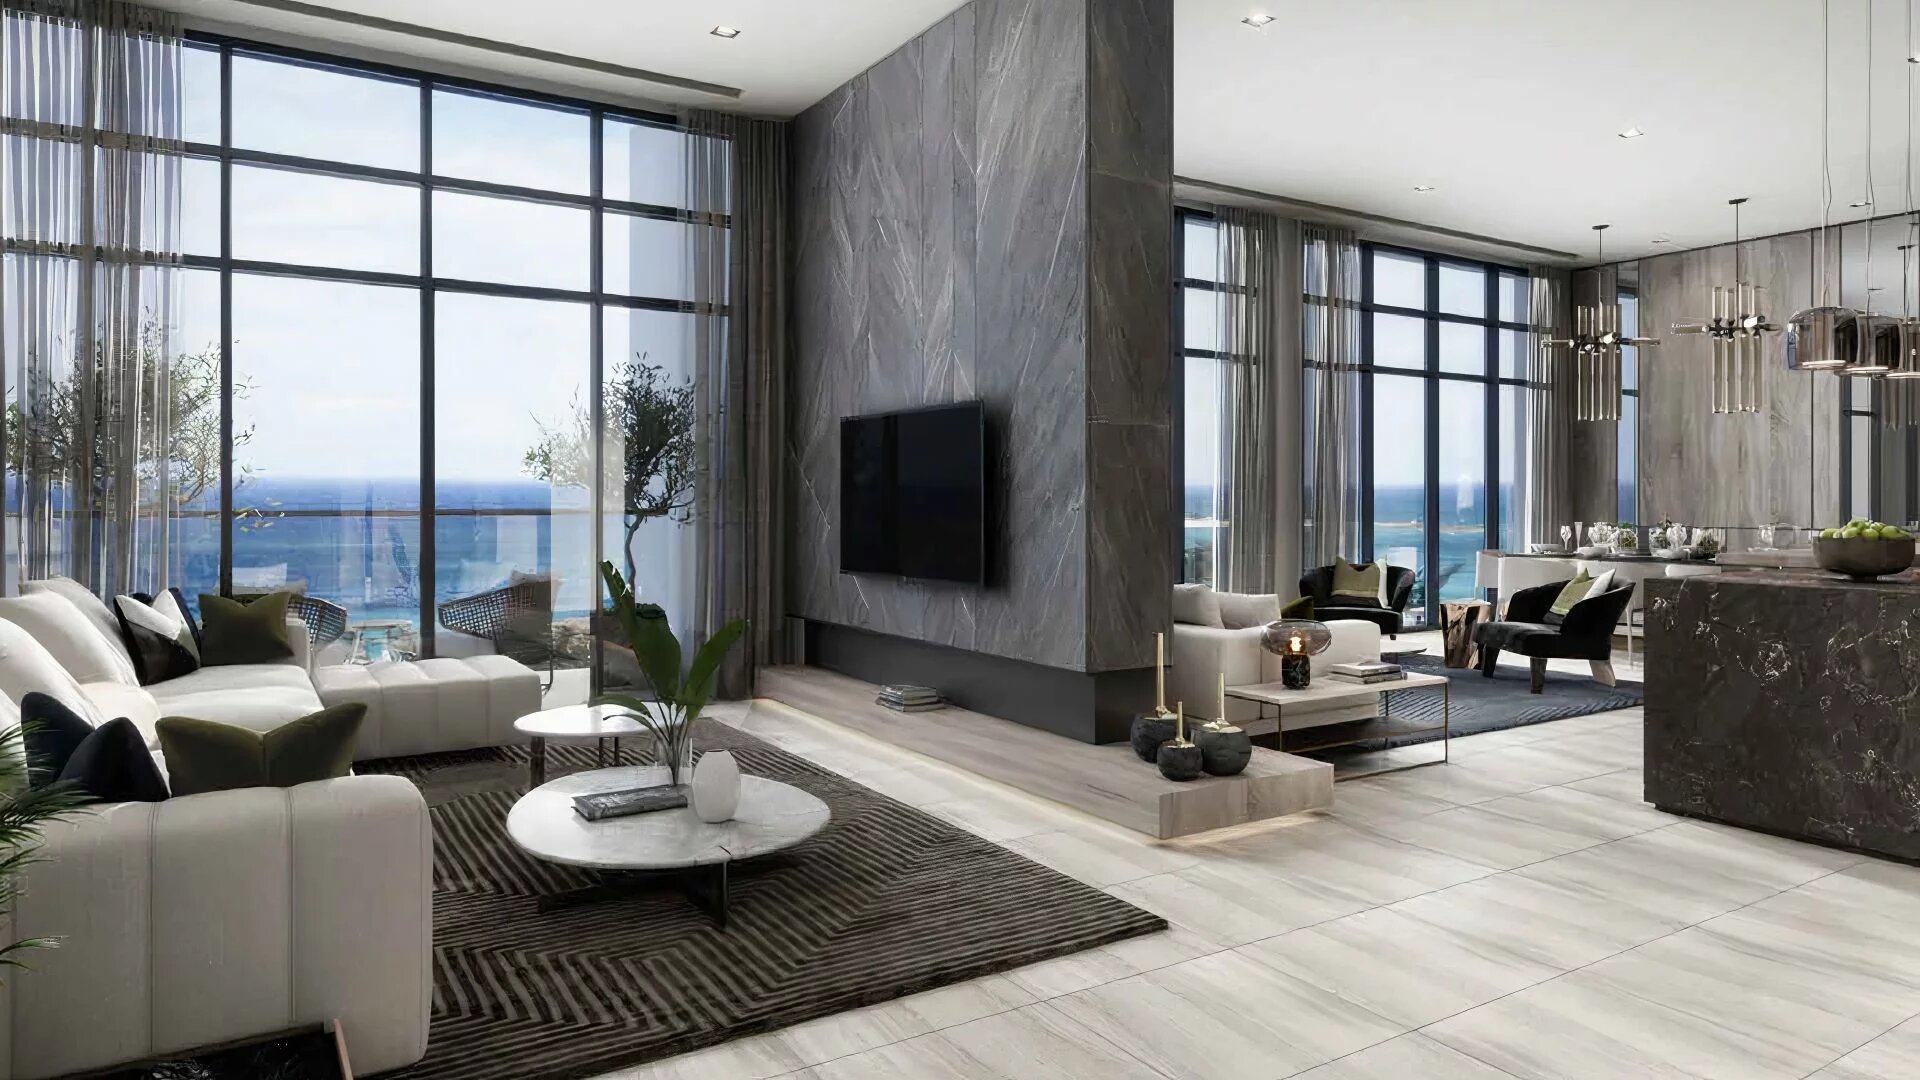 Apartment for sale in Maritime City, Dubai, UAE, 1 bedroom, 93 m², No. 24961 – photo 1